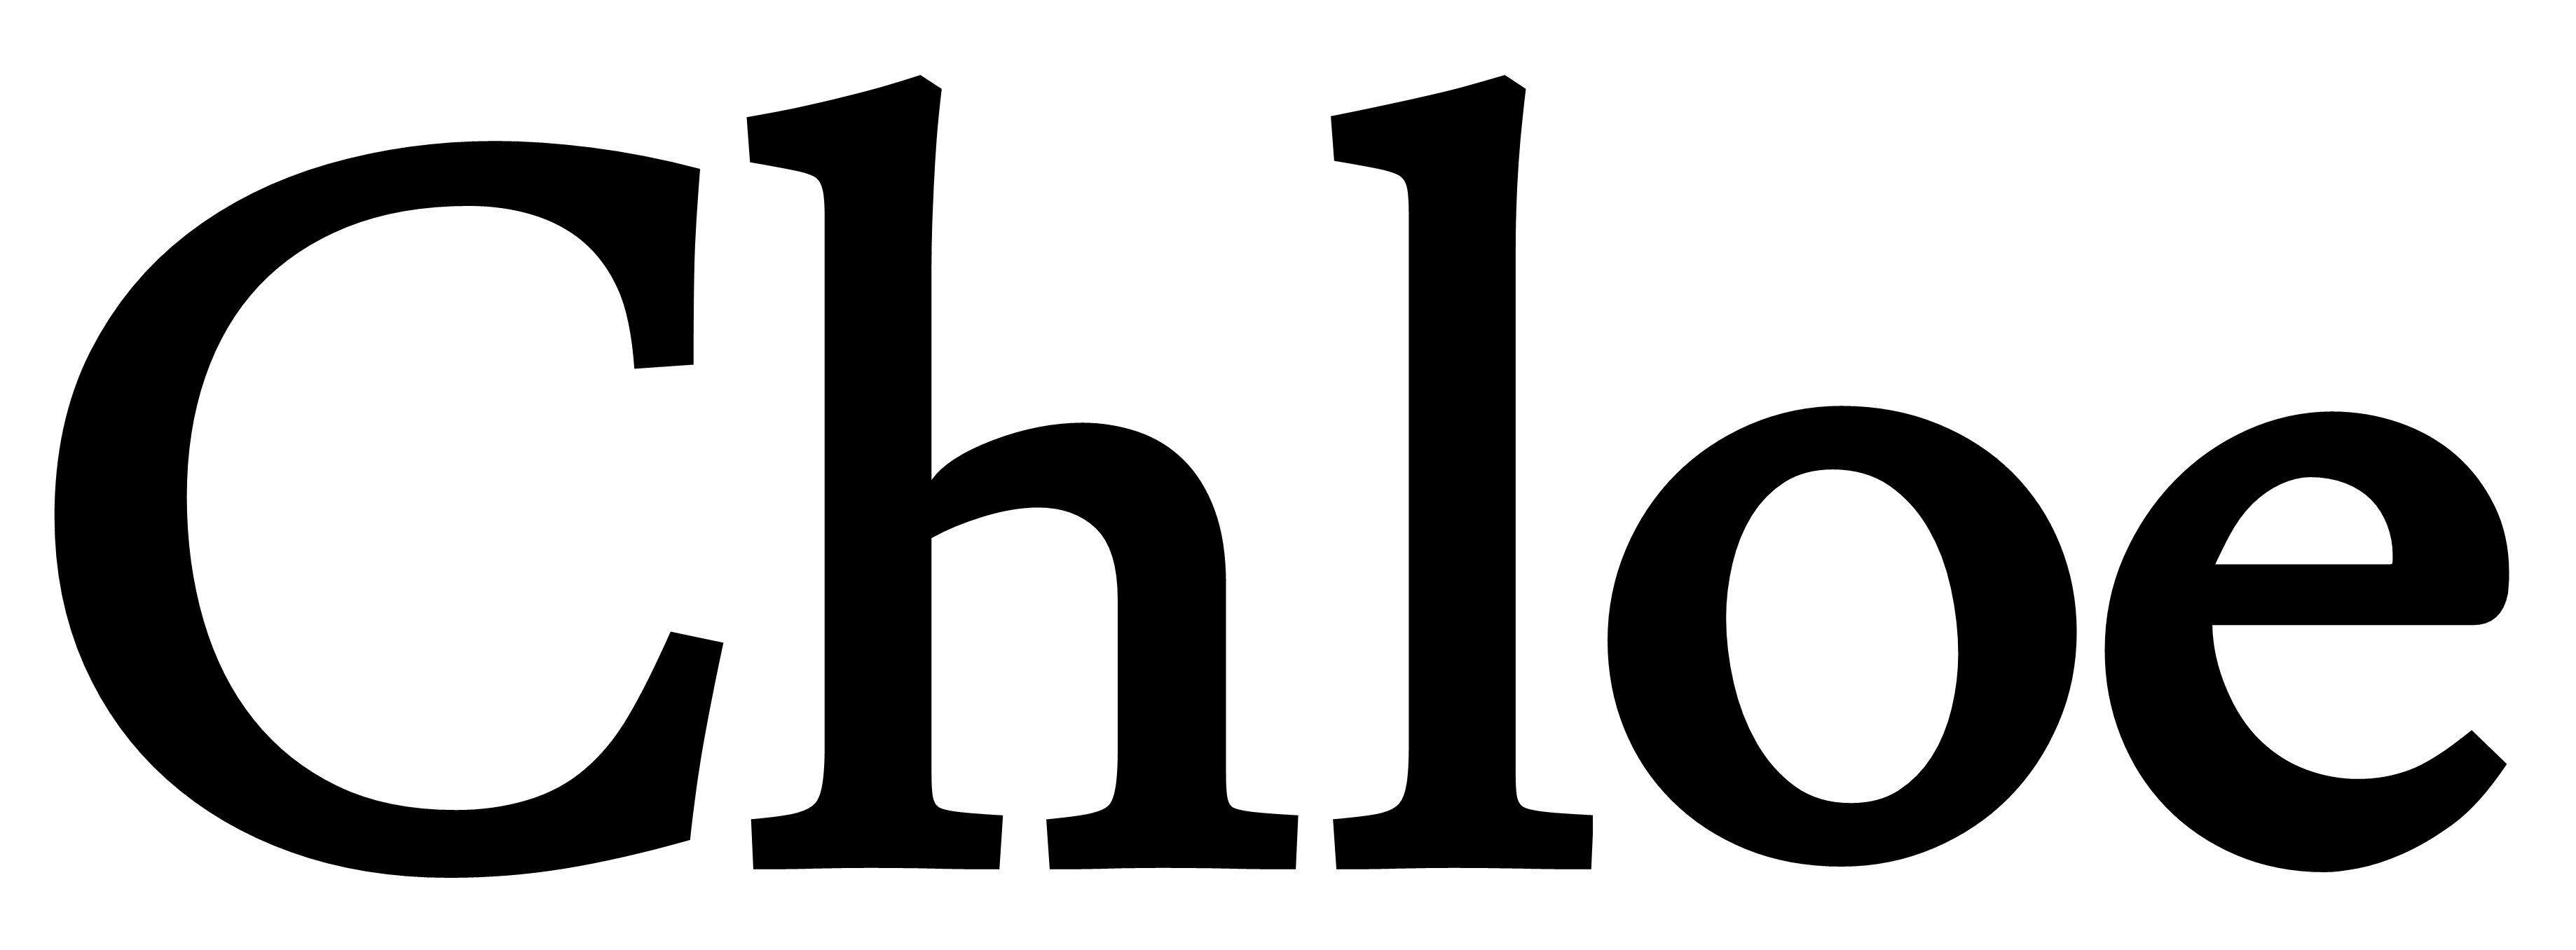 Chloe Brand Logo